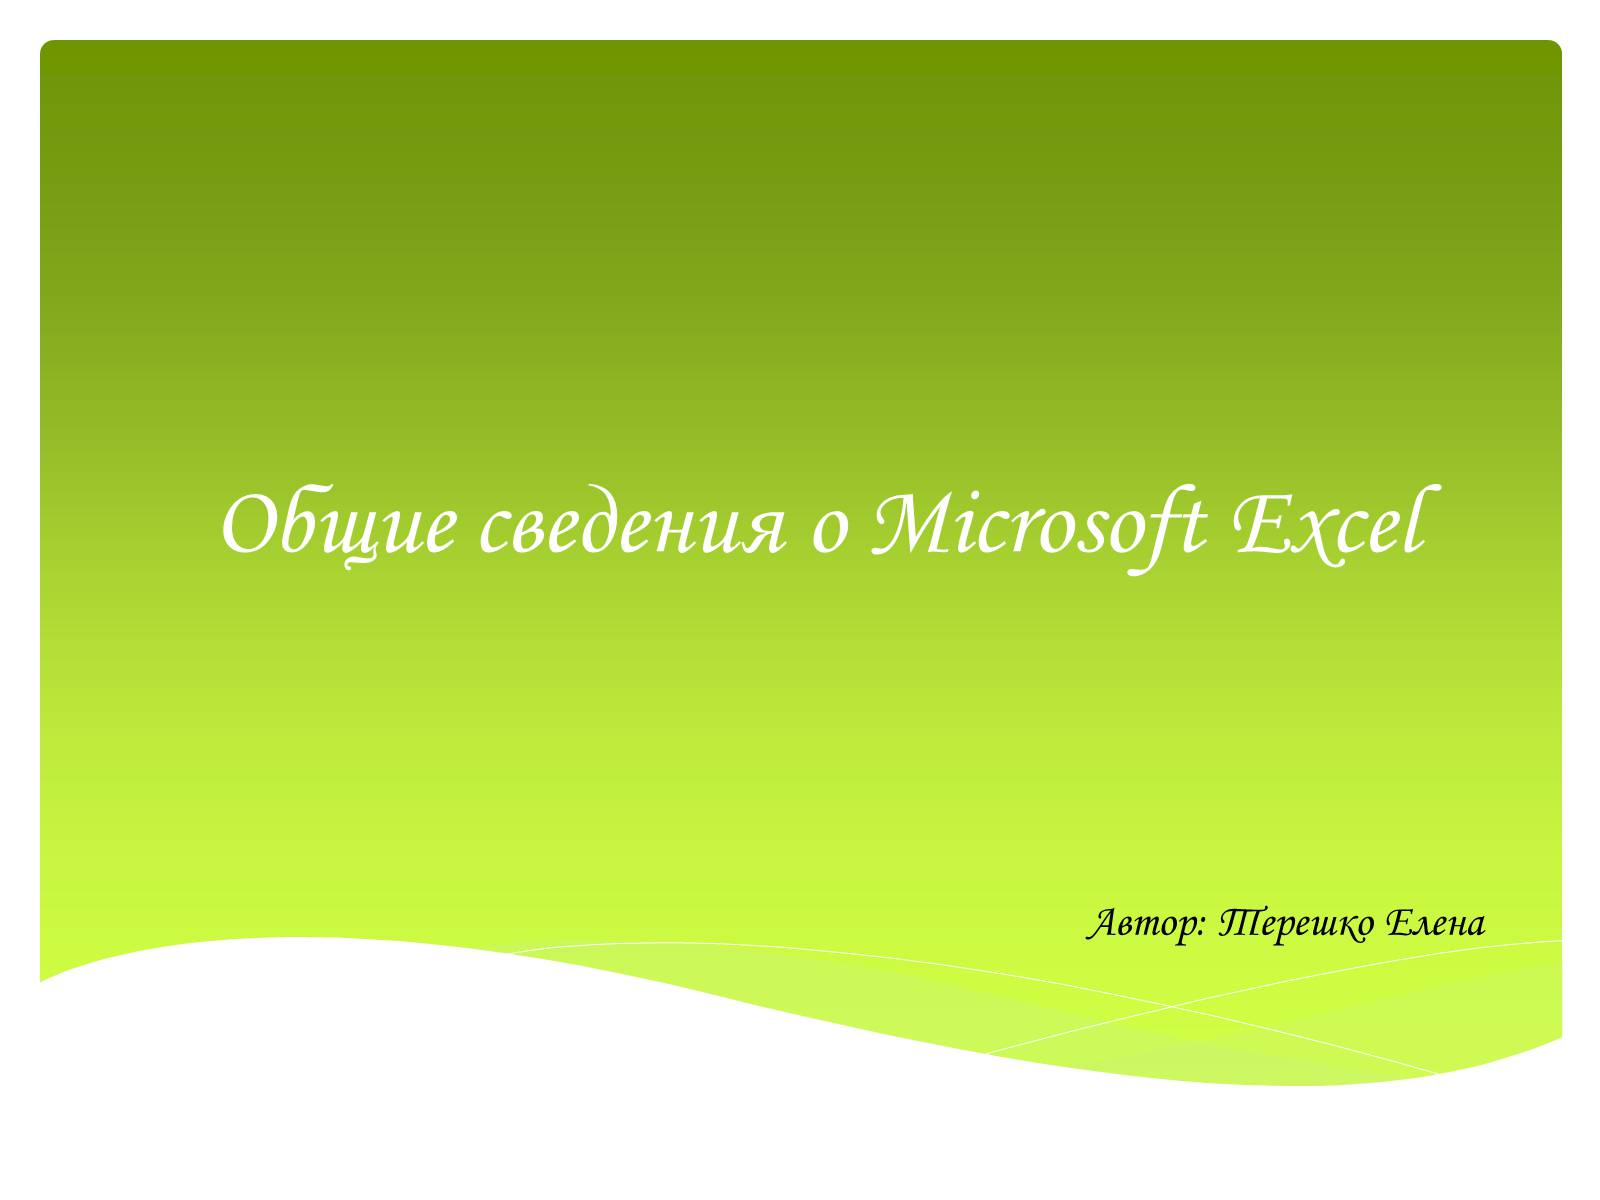 Презентація на тему «Общие сведения о Microsoft Excel» - Слайд #1